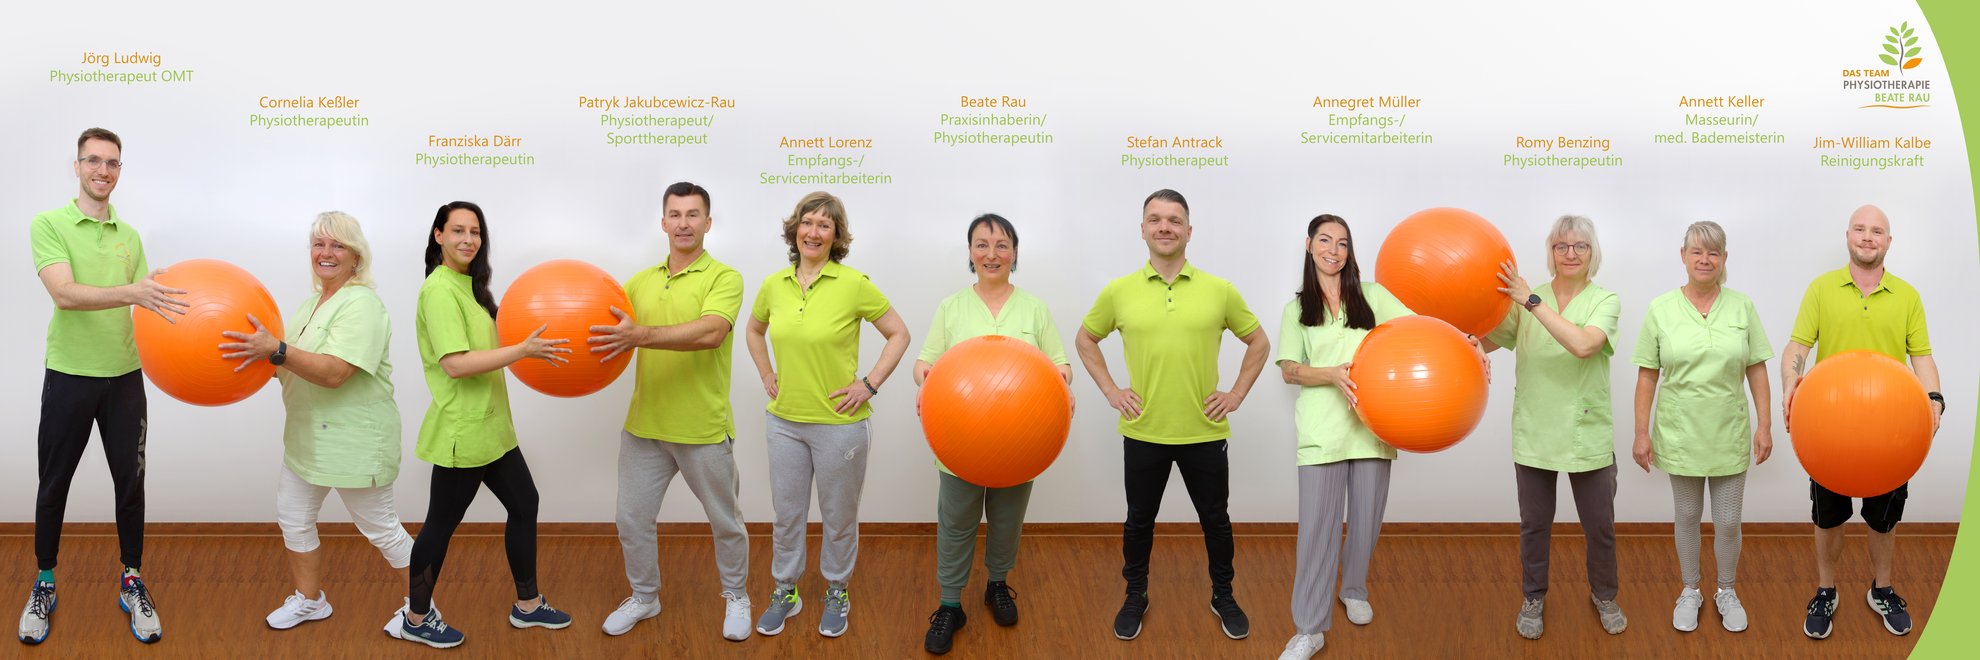 Team der Physiotherapie Praxis Rau Zwickau